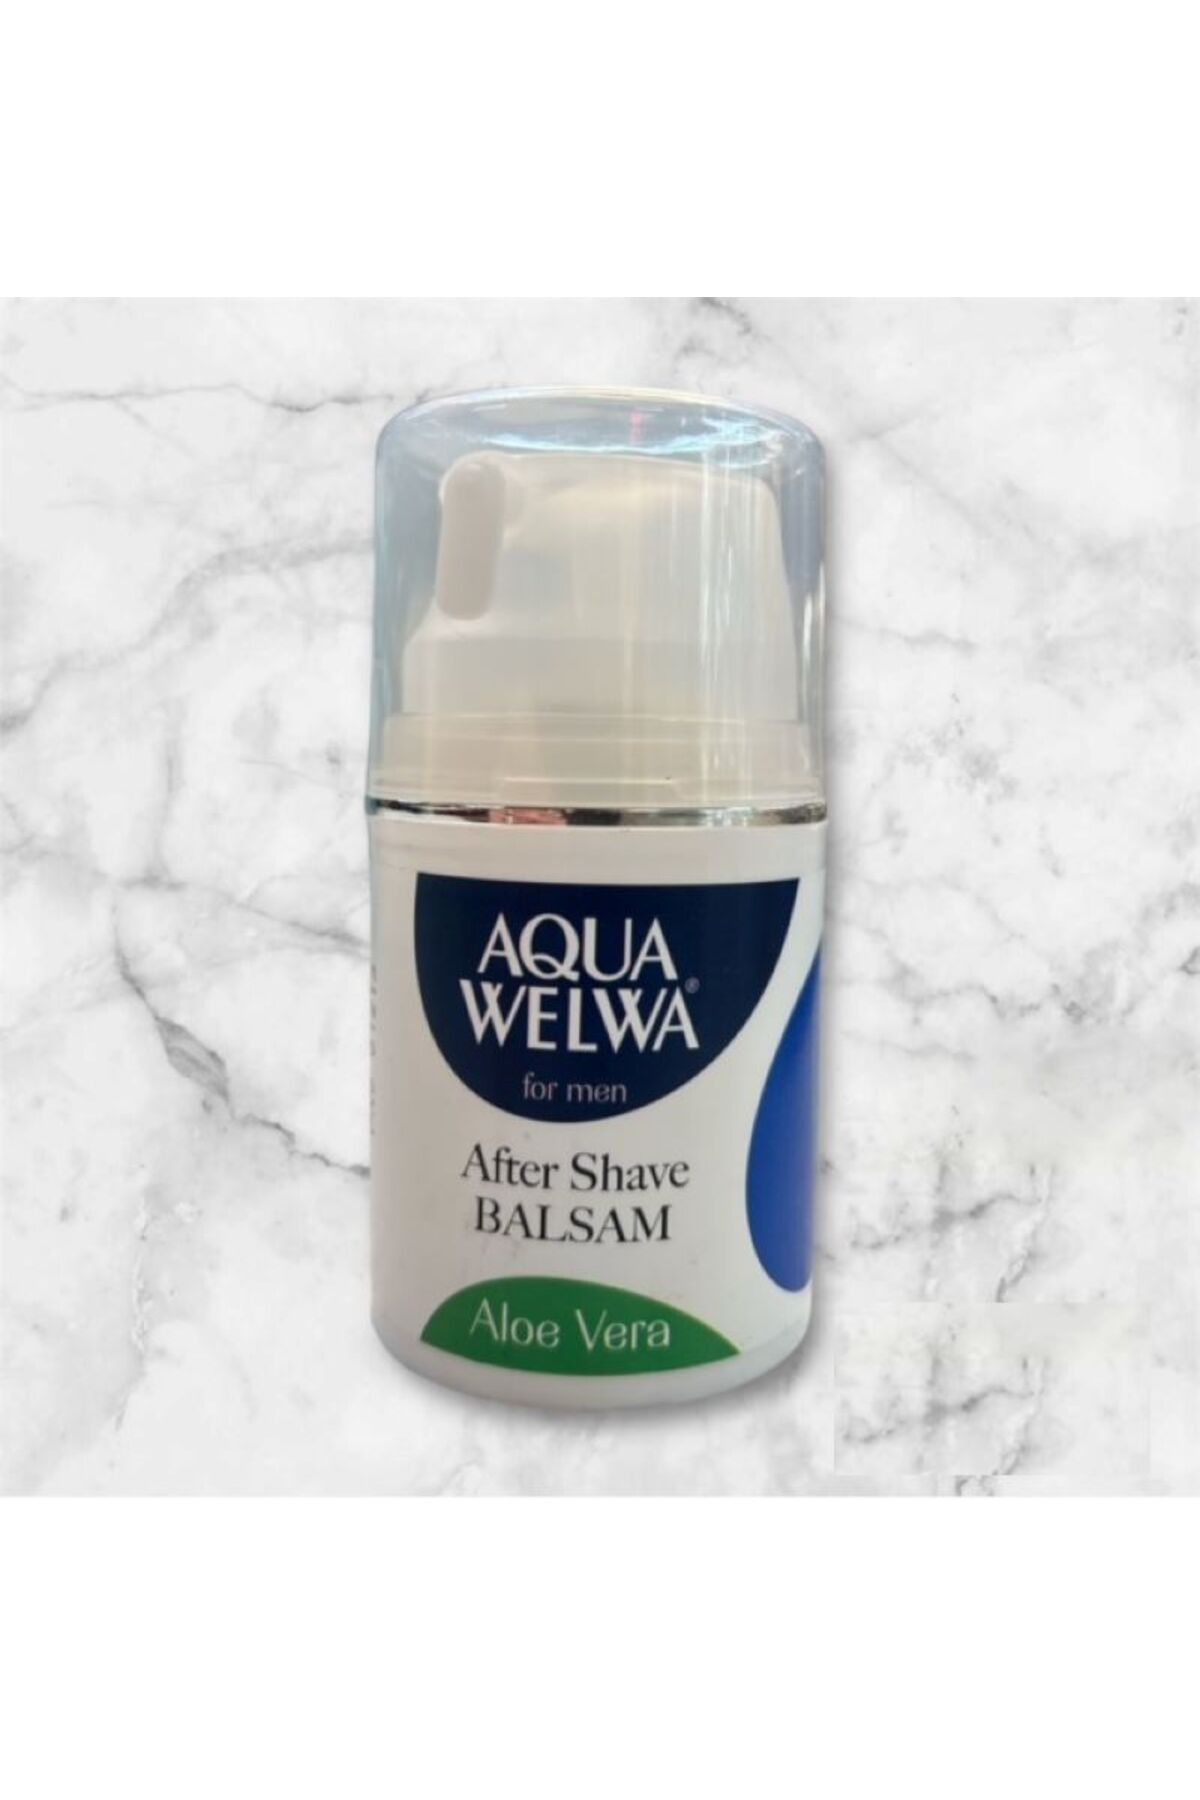 Aqua Welwa After Shave Balsam Aloe Vera 50ml.